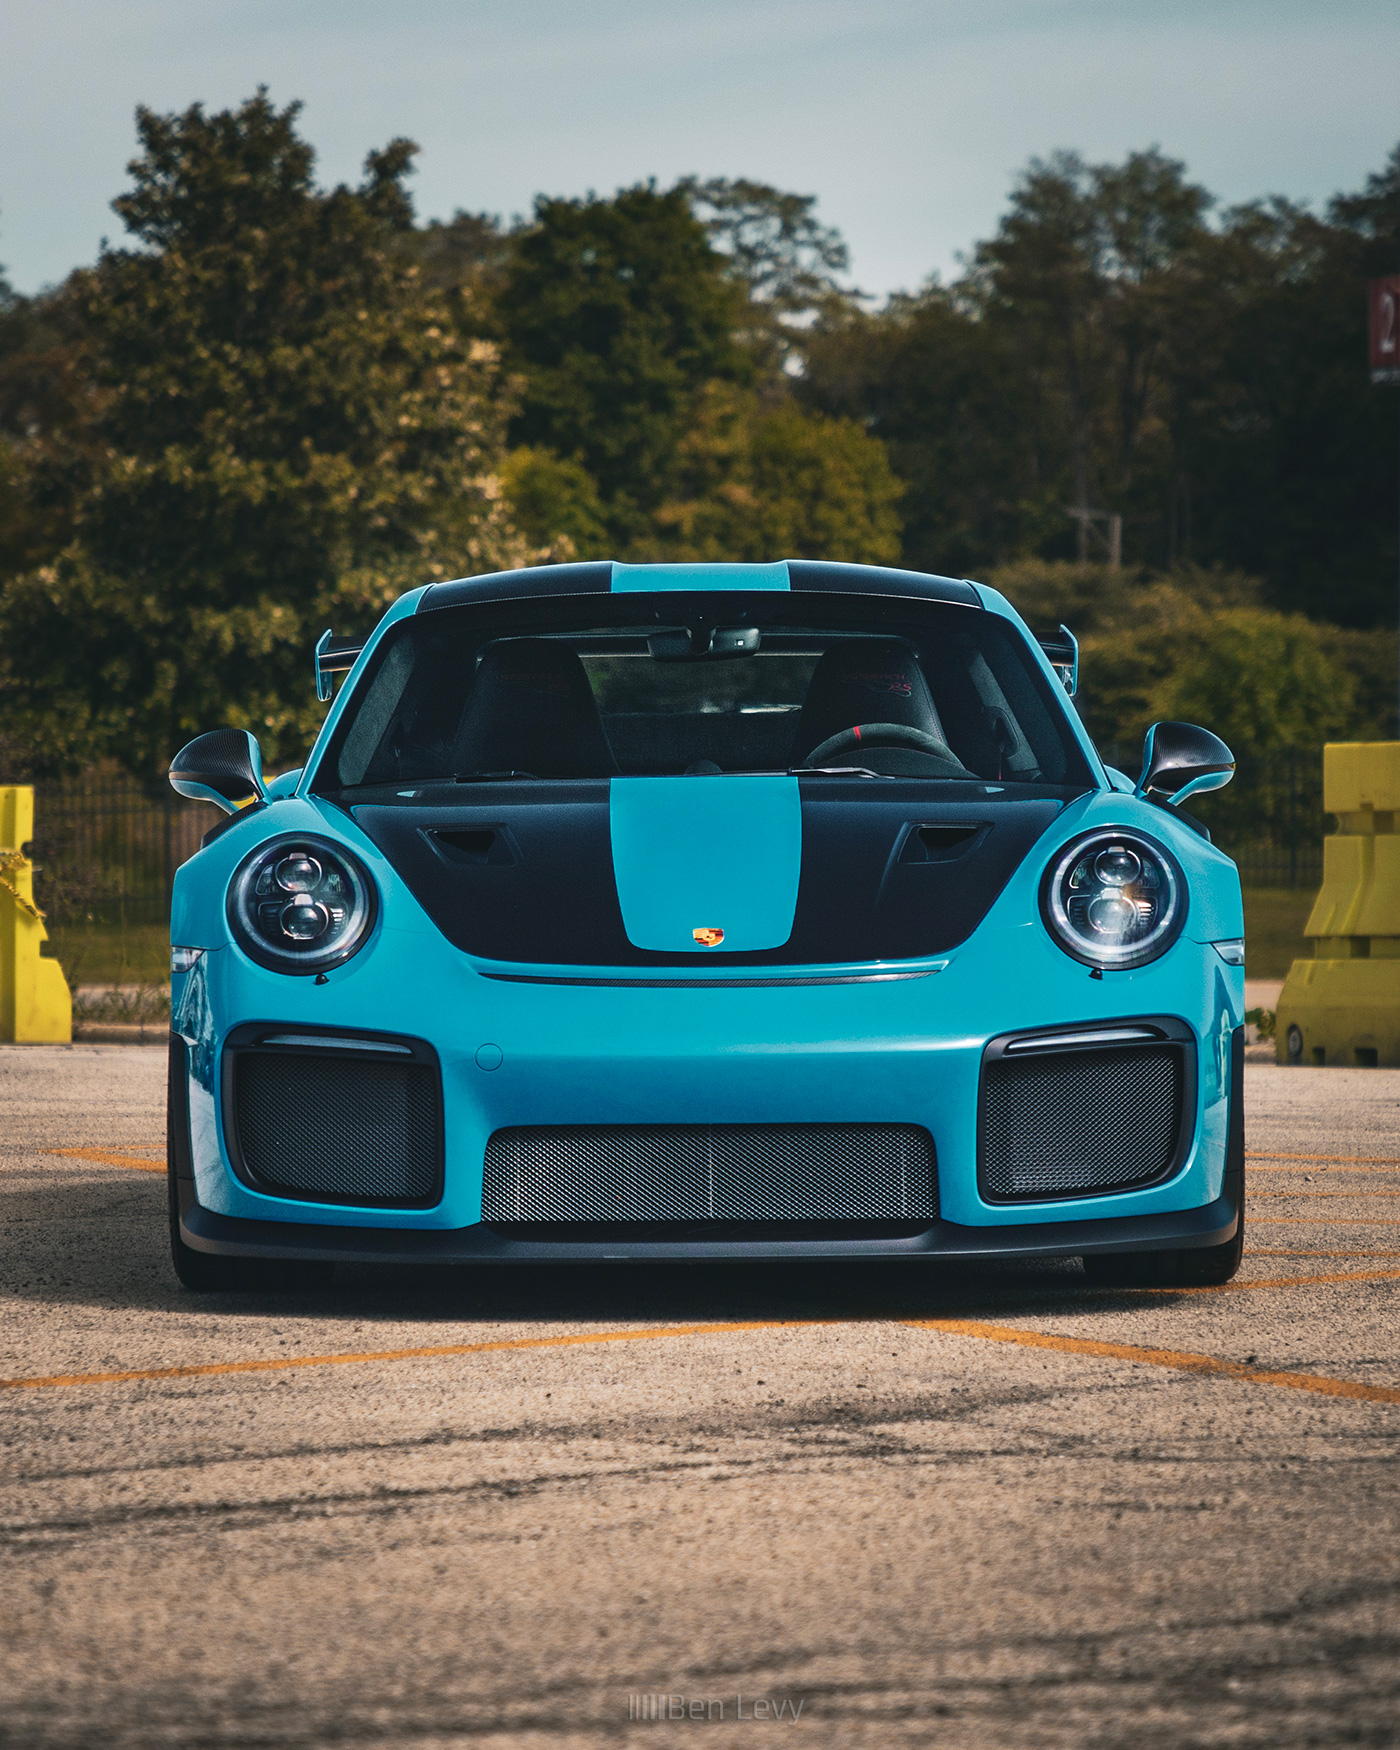 Front of a Blue Porsche GT2 RS